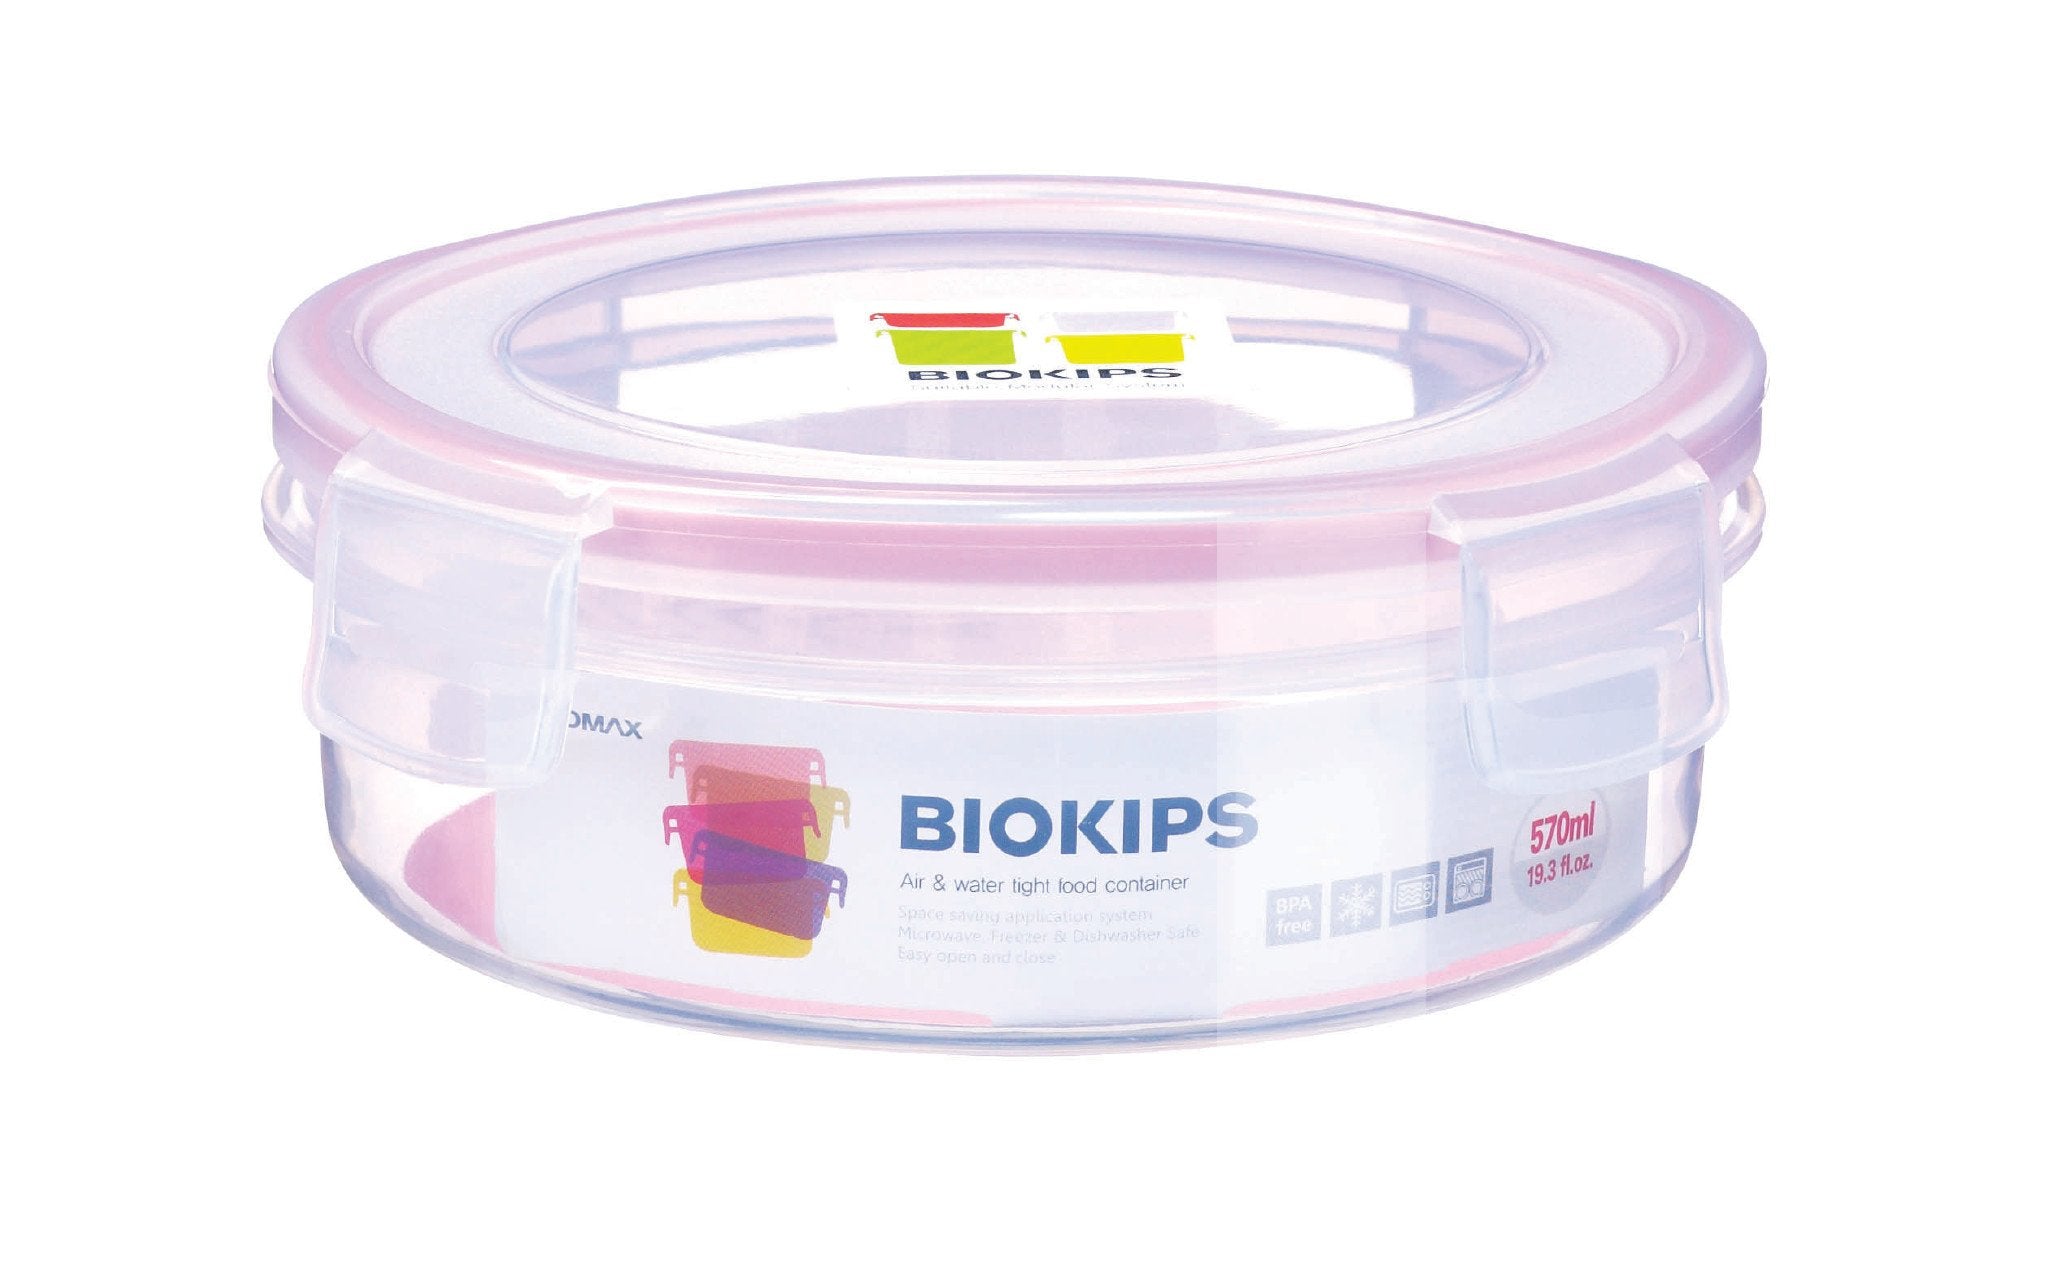 Komax Biokips Round Food Storage Container, 570 ml